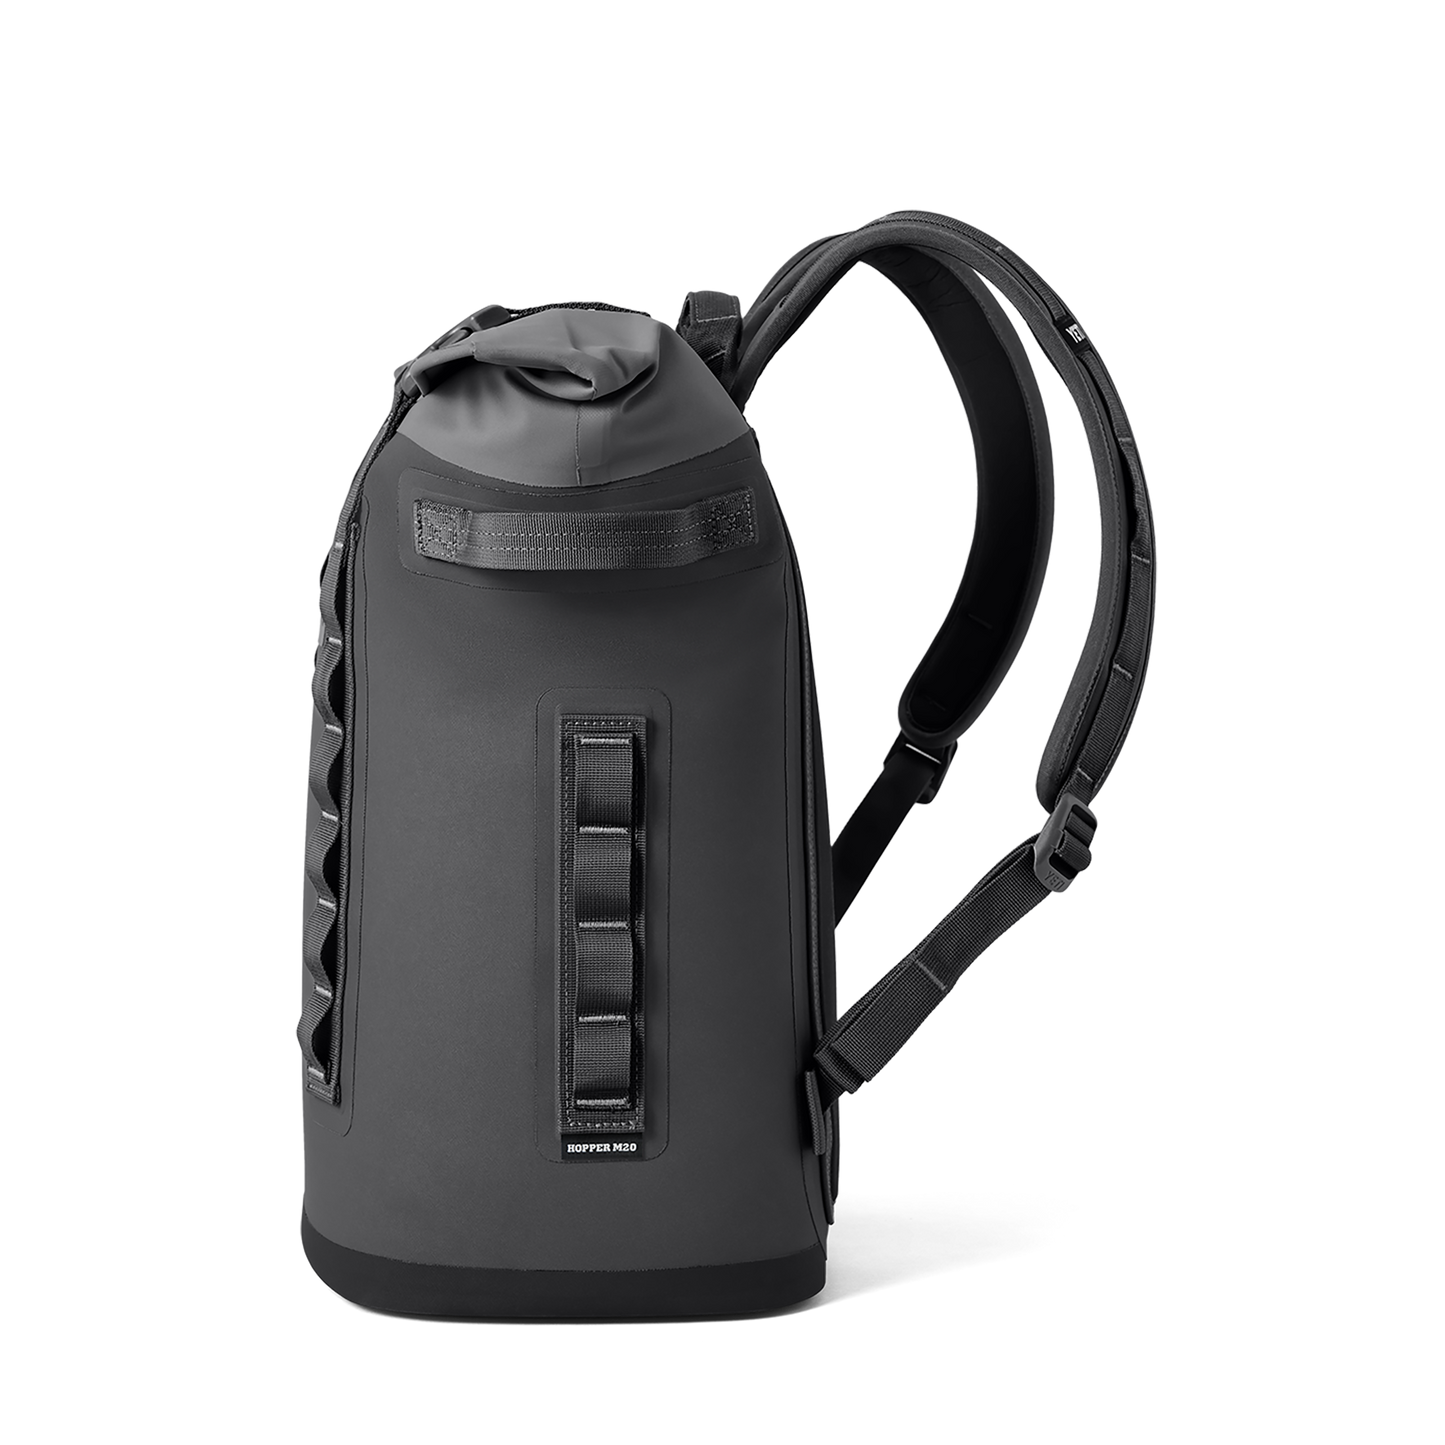 YETI Hopper® M20 Soft Backpack Cooler Charcoal